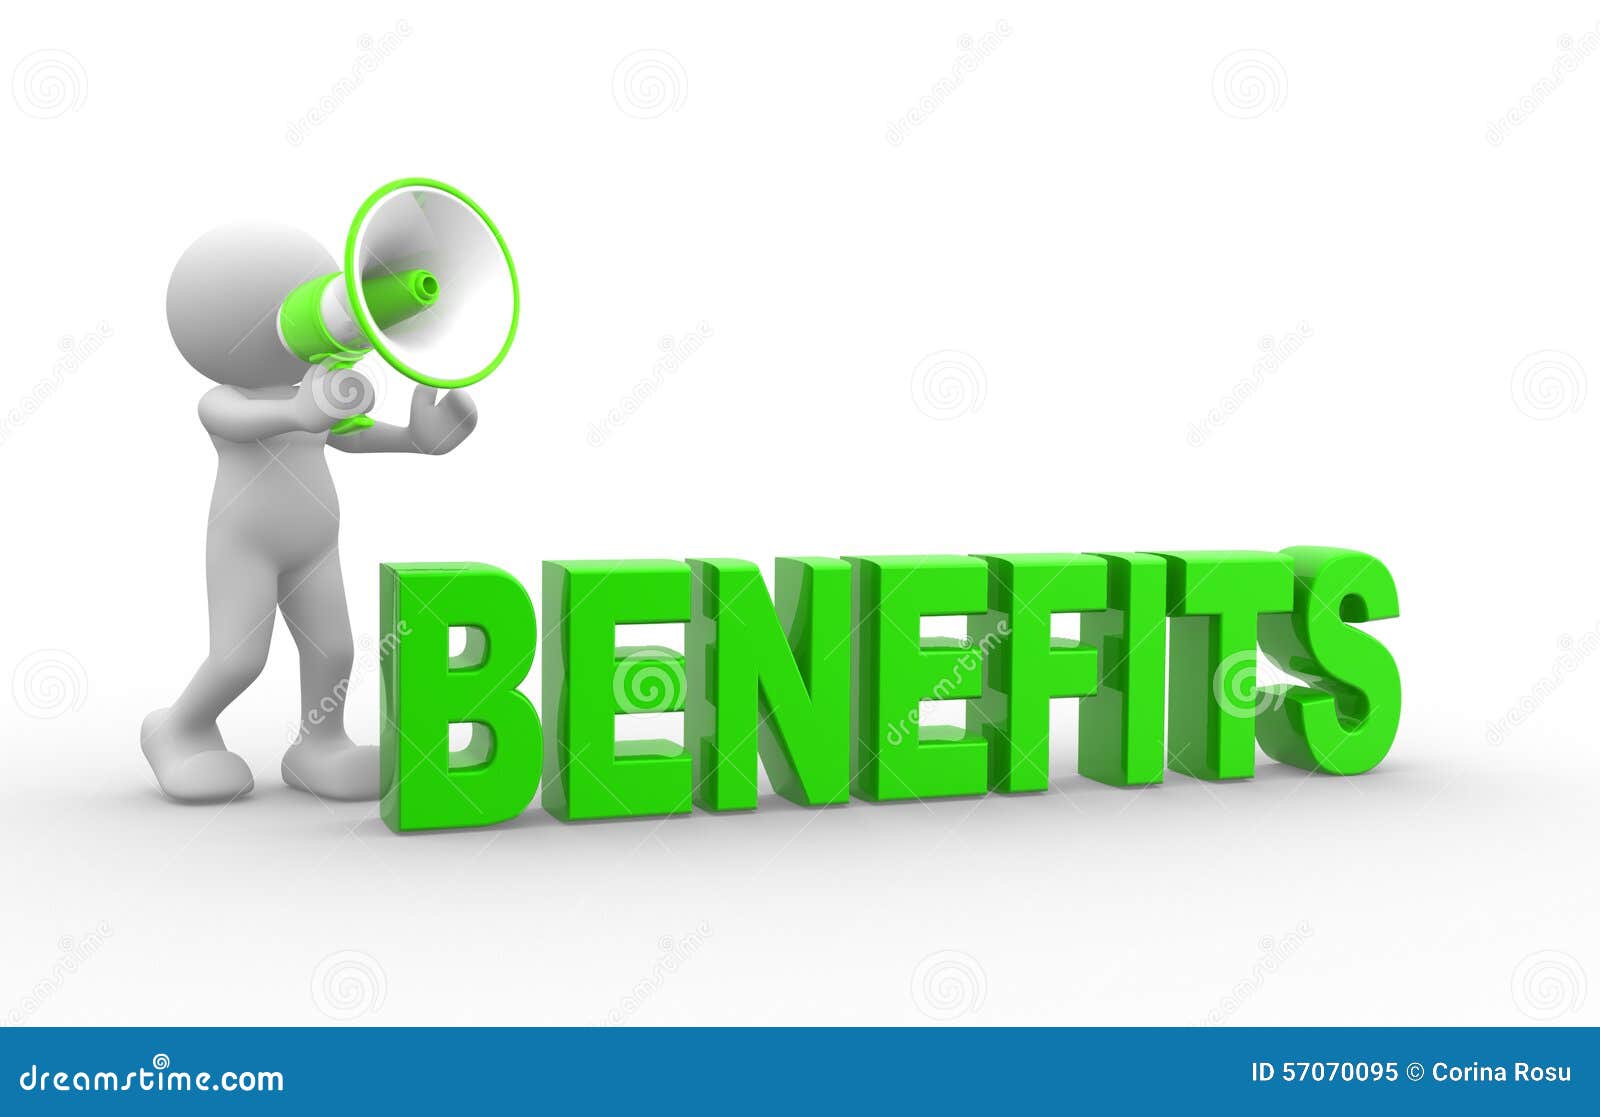 clipart employee benefits - photo #38